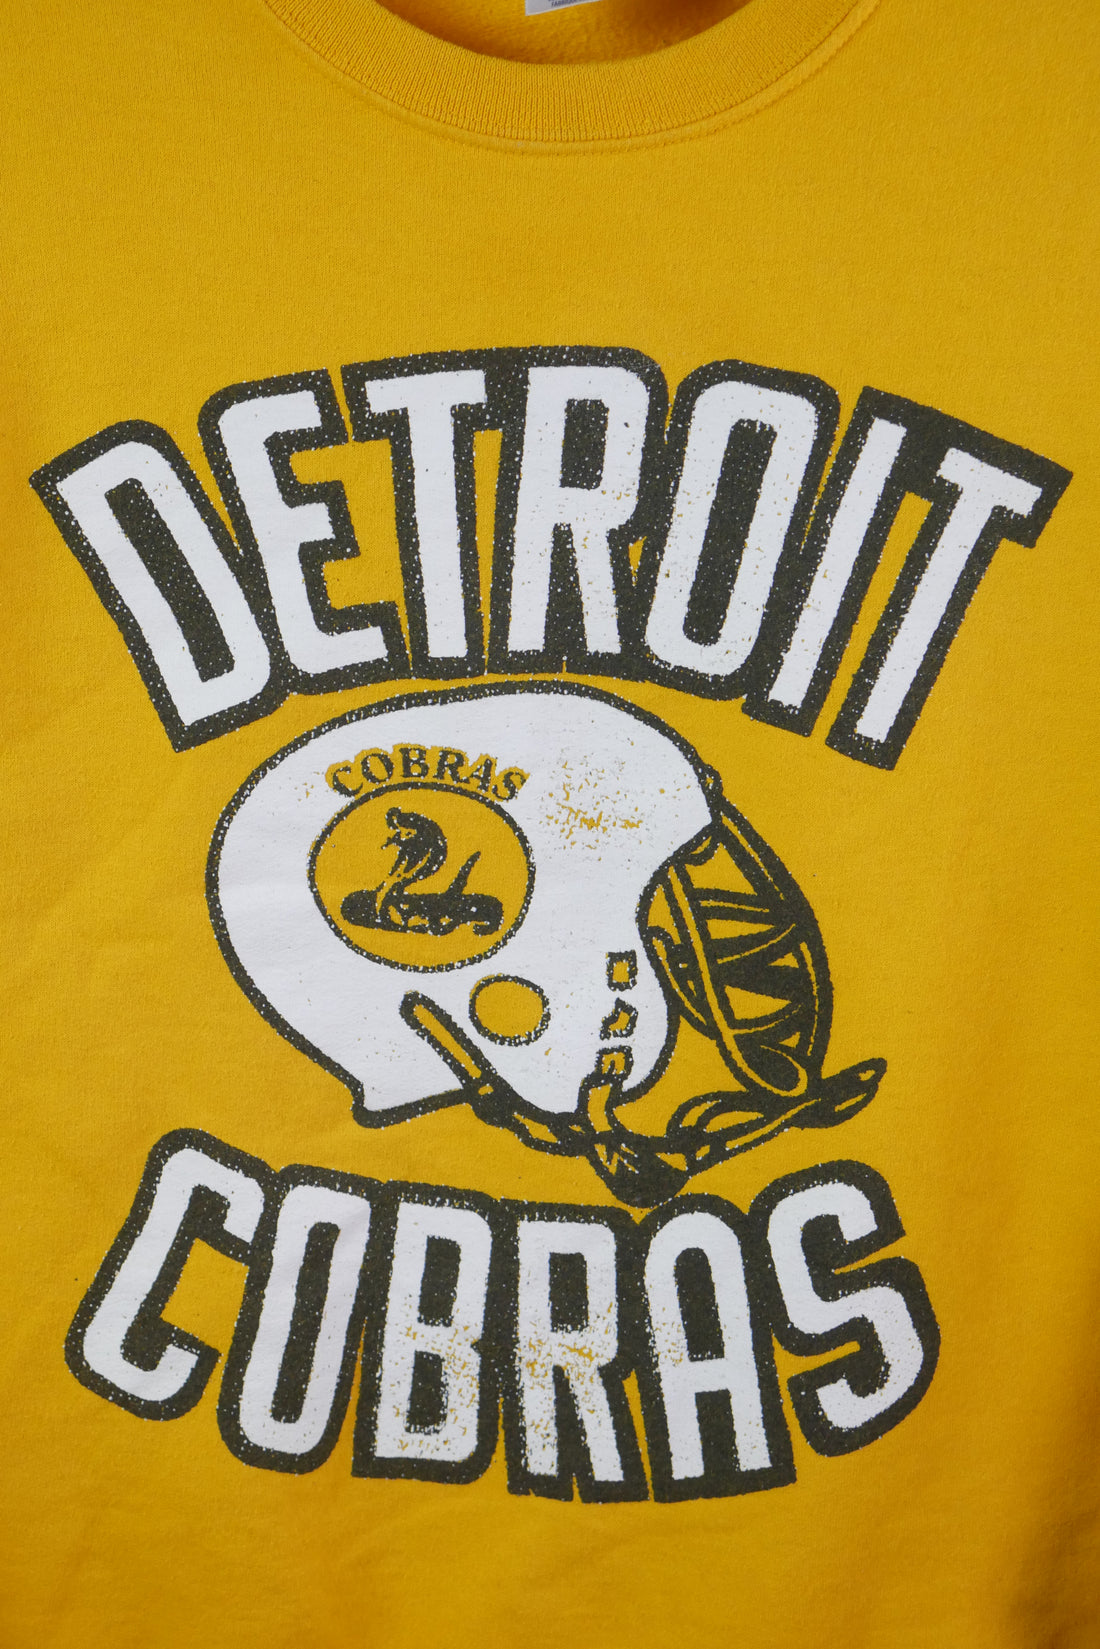 The Detroit Cobras Sweater (S)